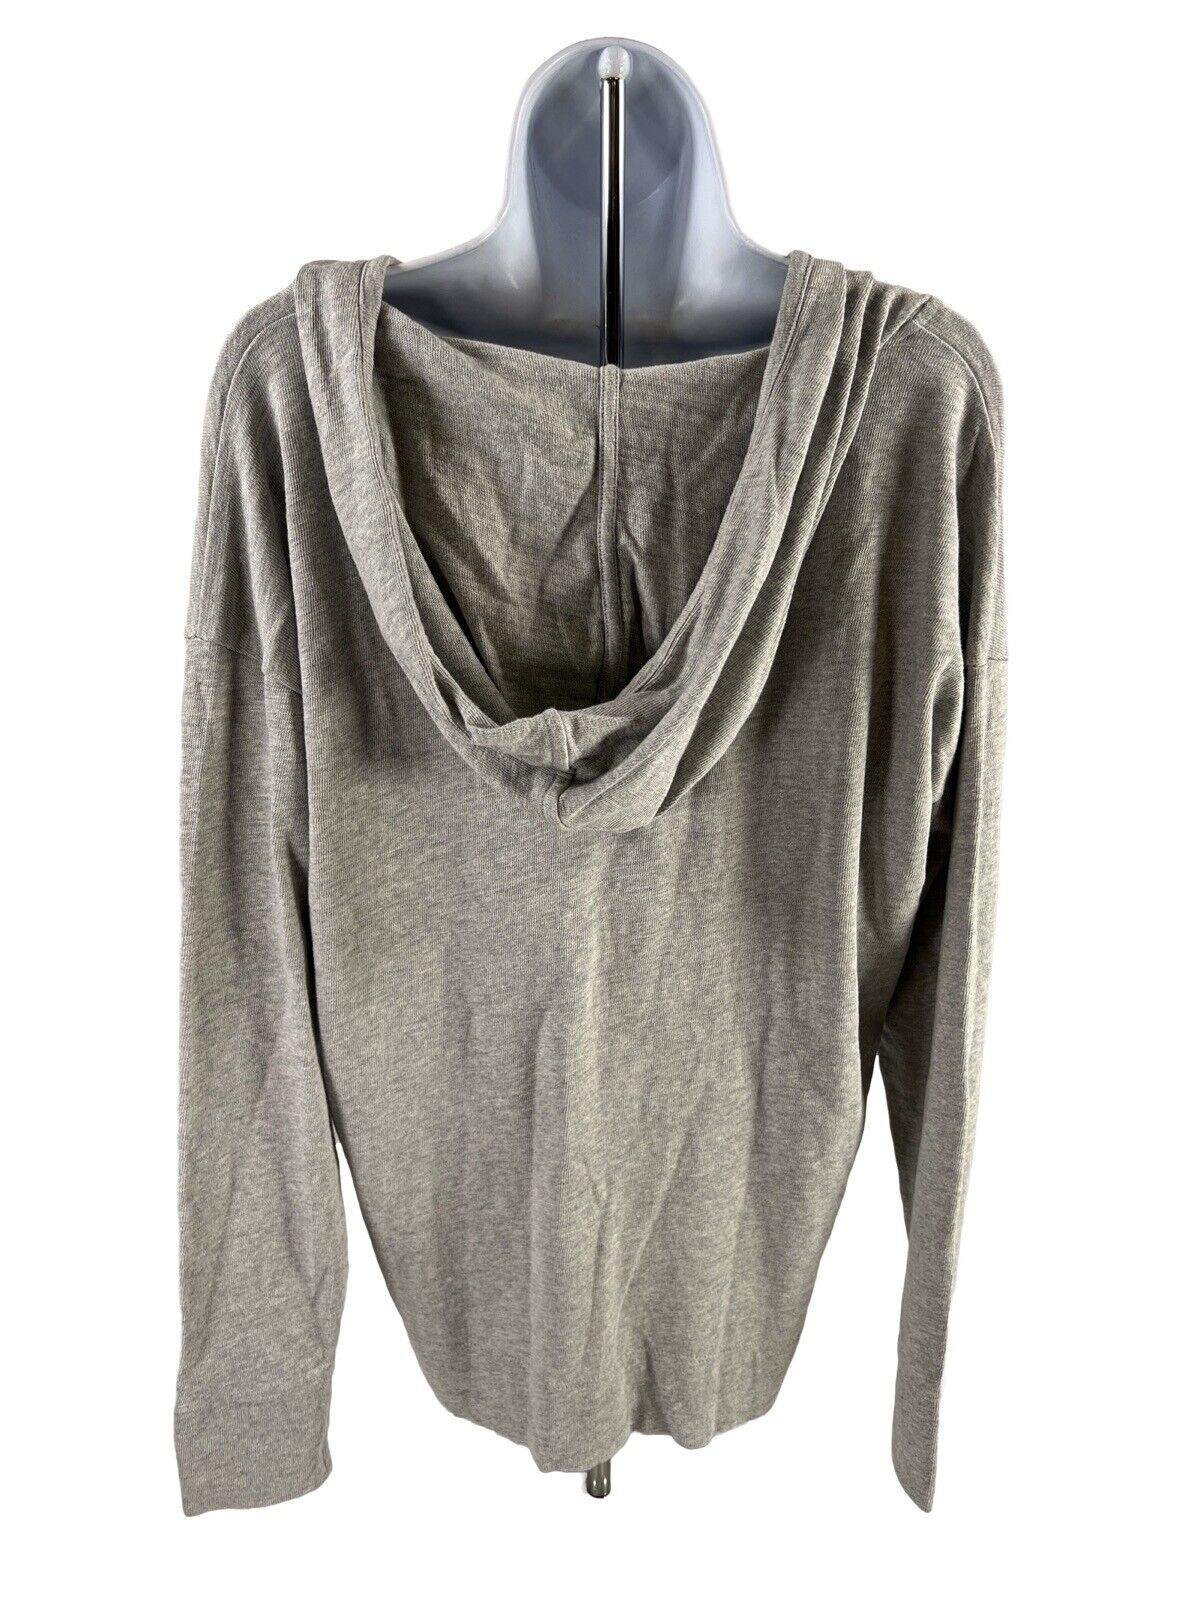 NEW LOFT Women's Gray Long Sleeve Thin Knit Hooded Shirt - S